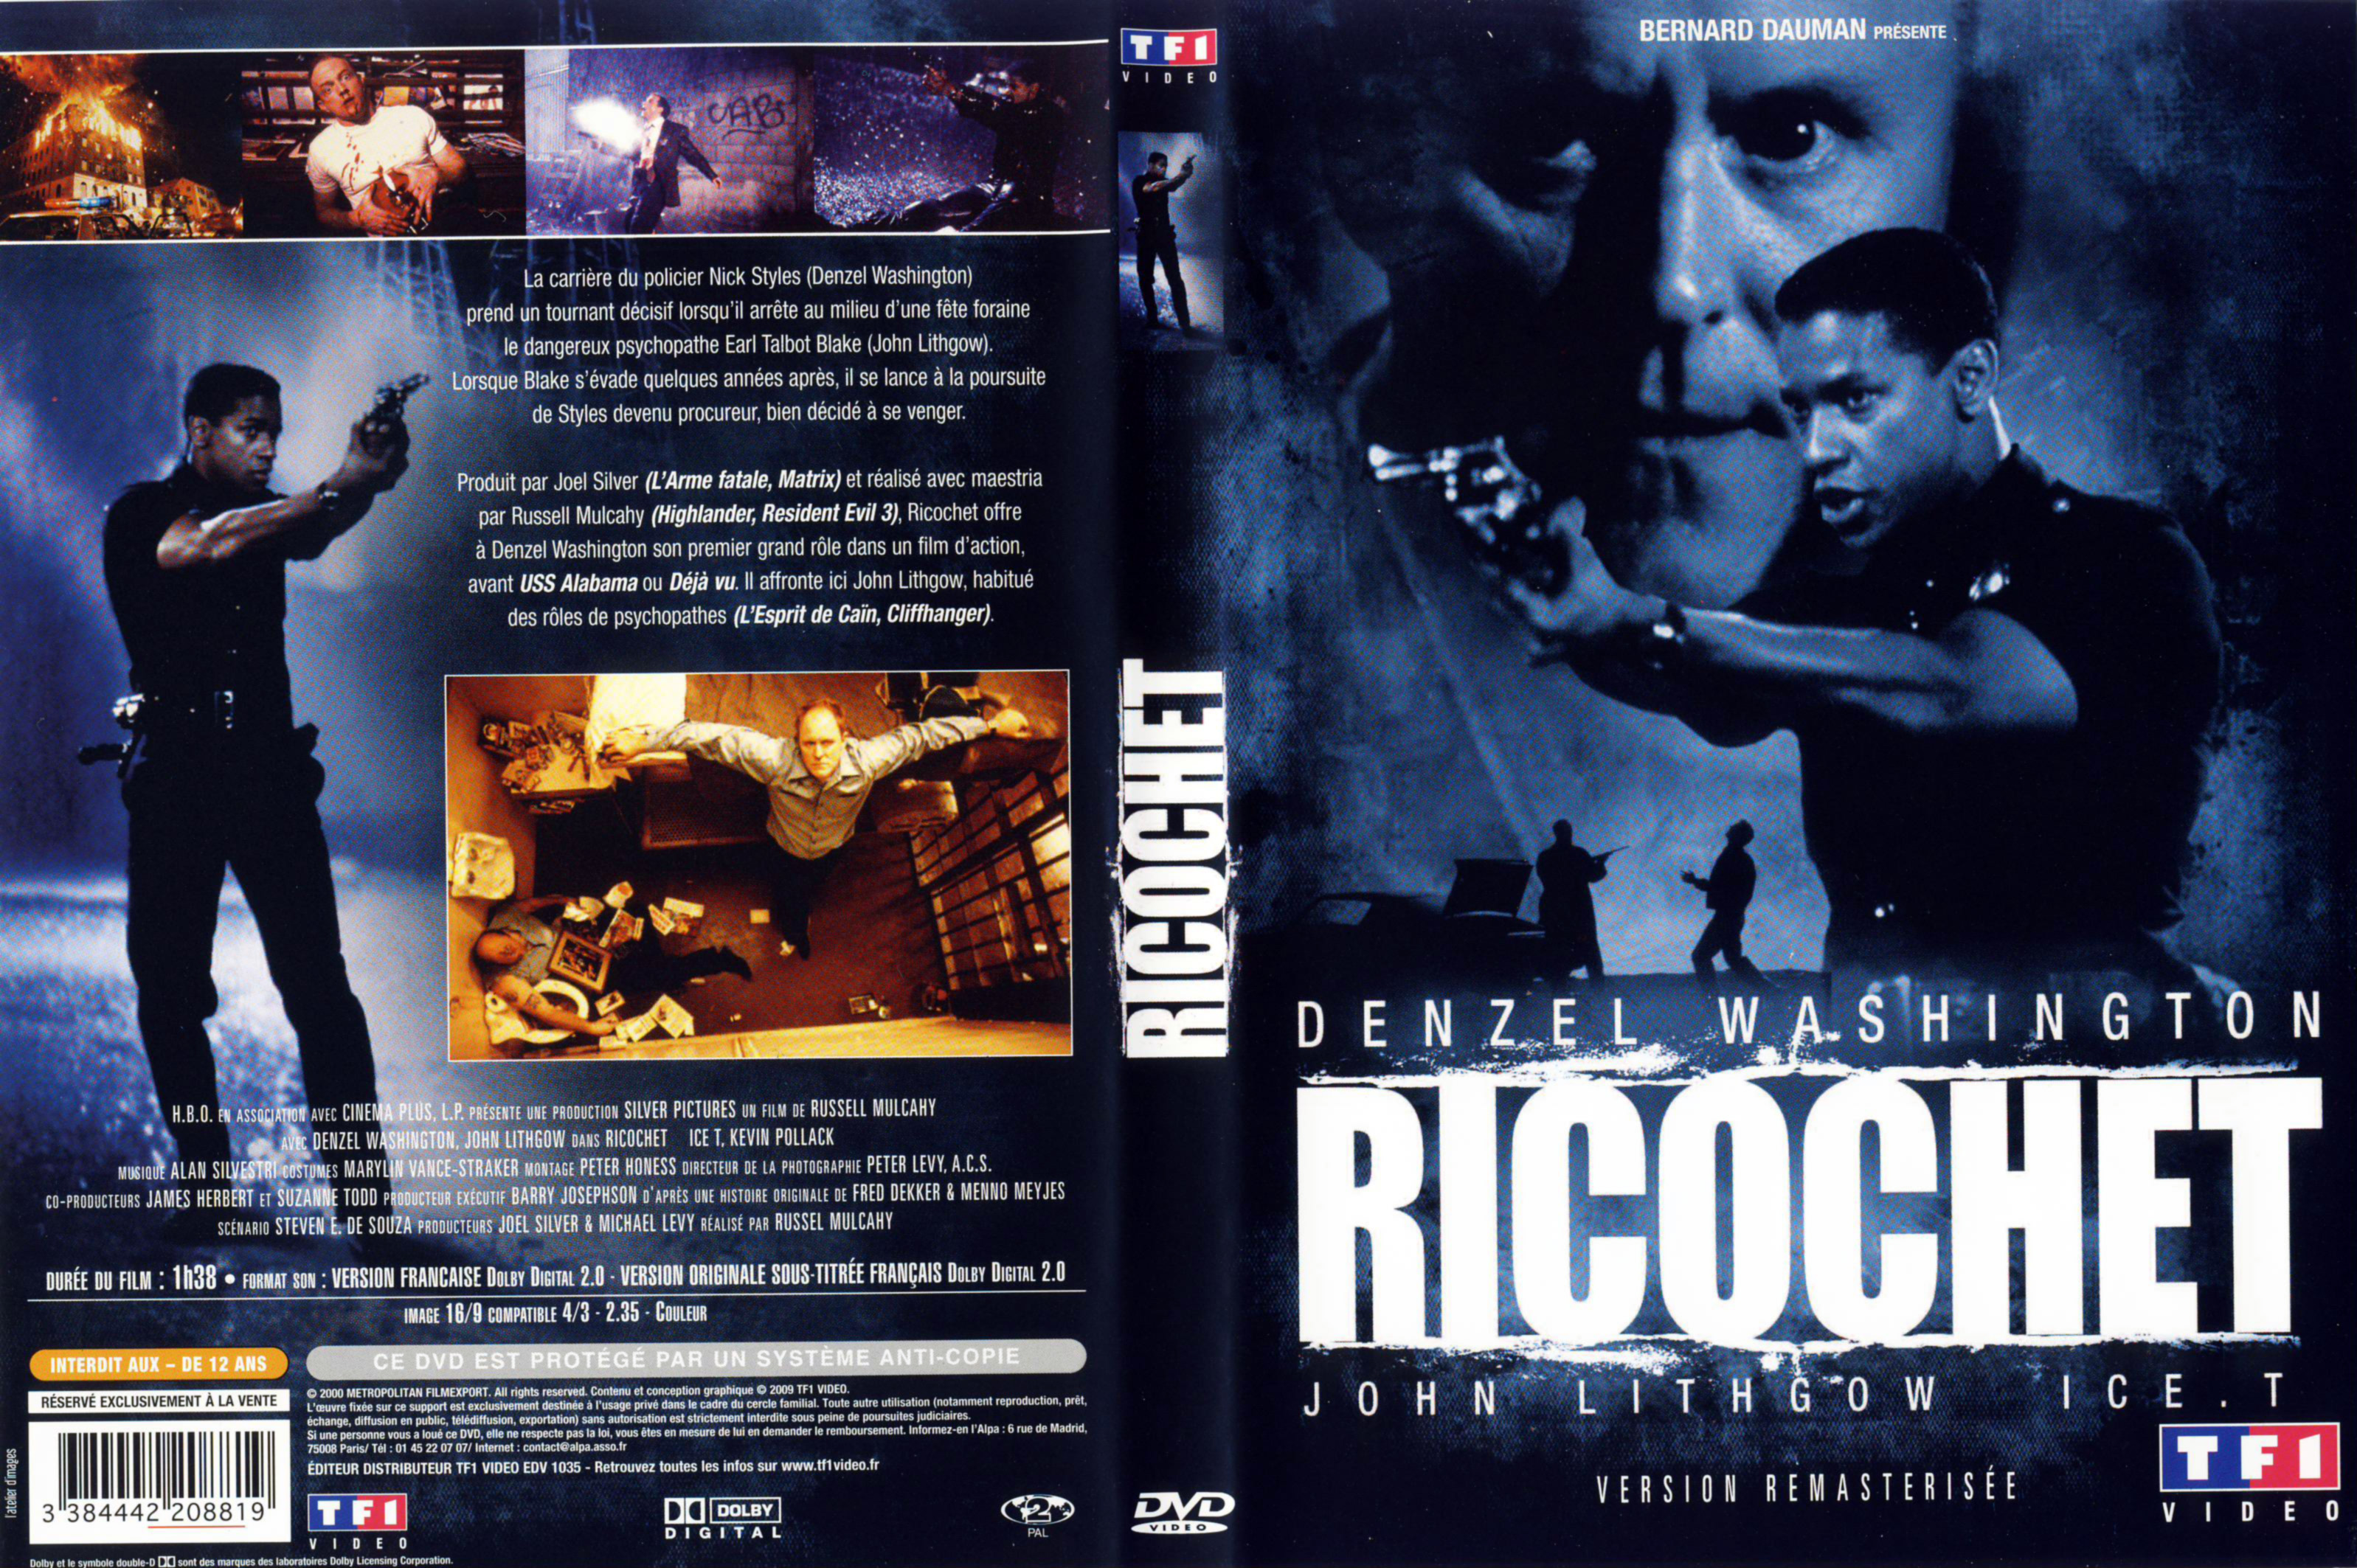 Jaquette DVD Ricochet v4